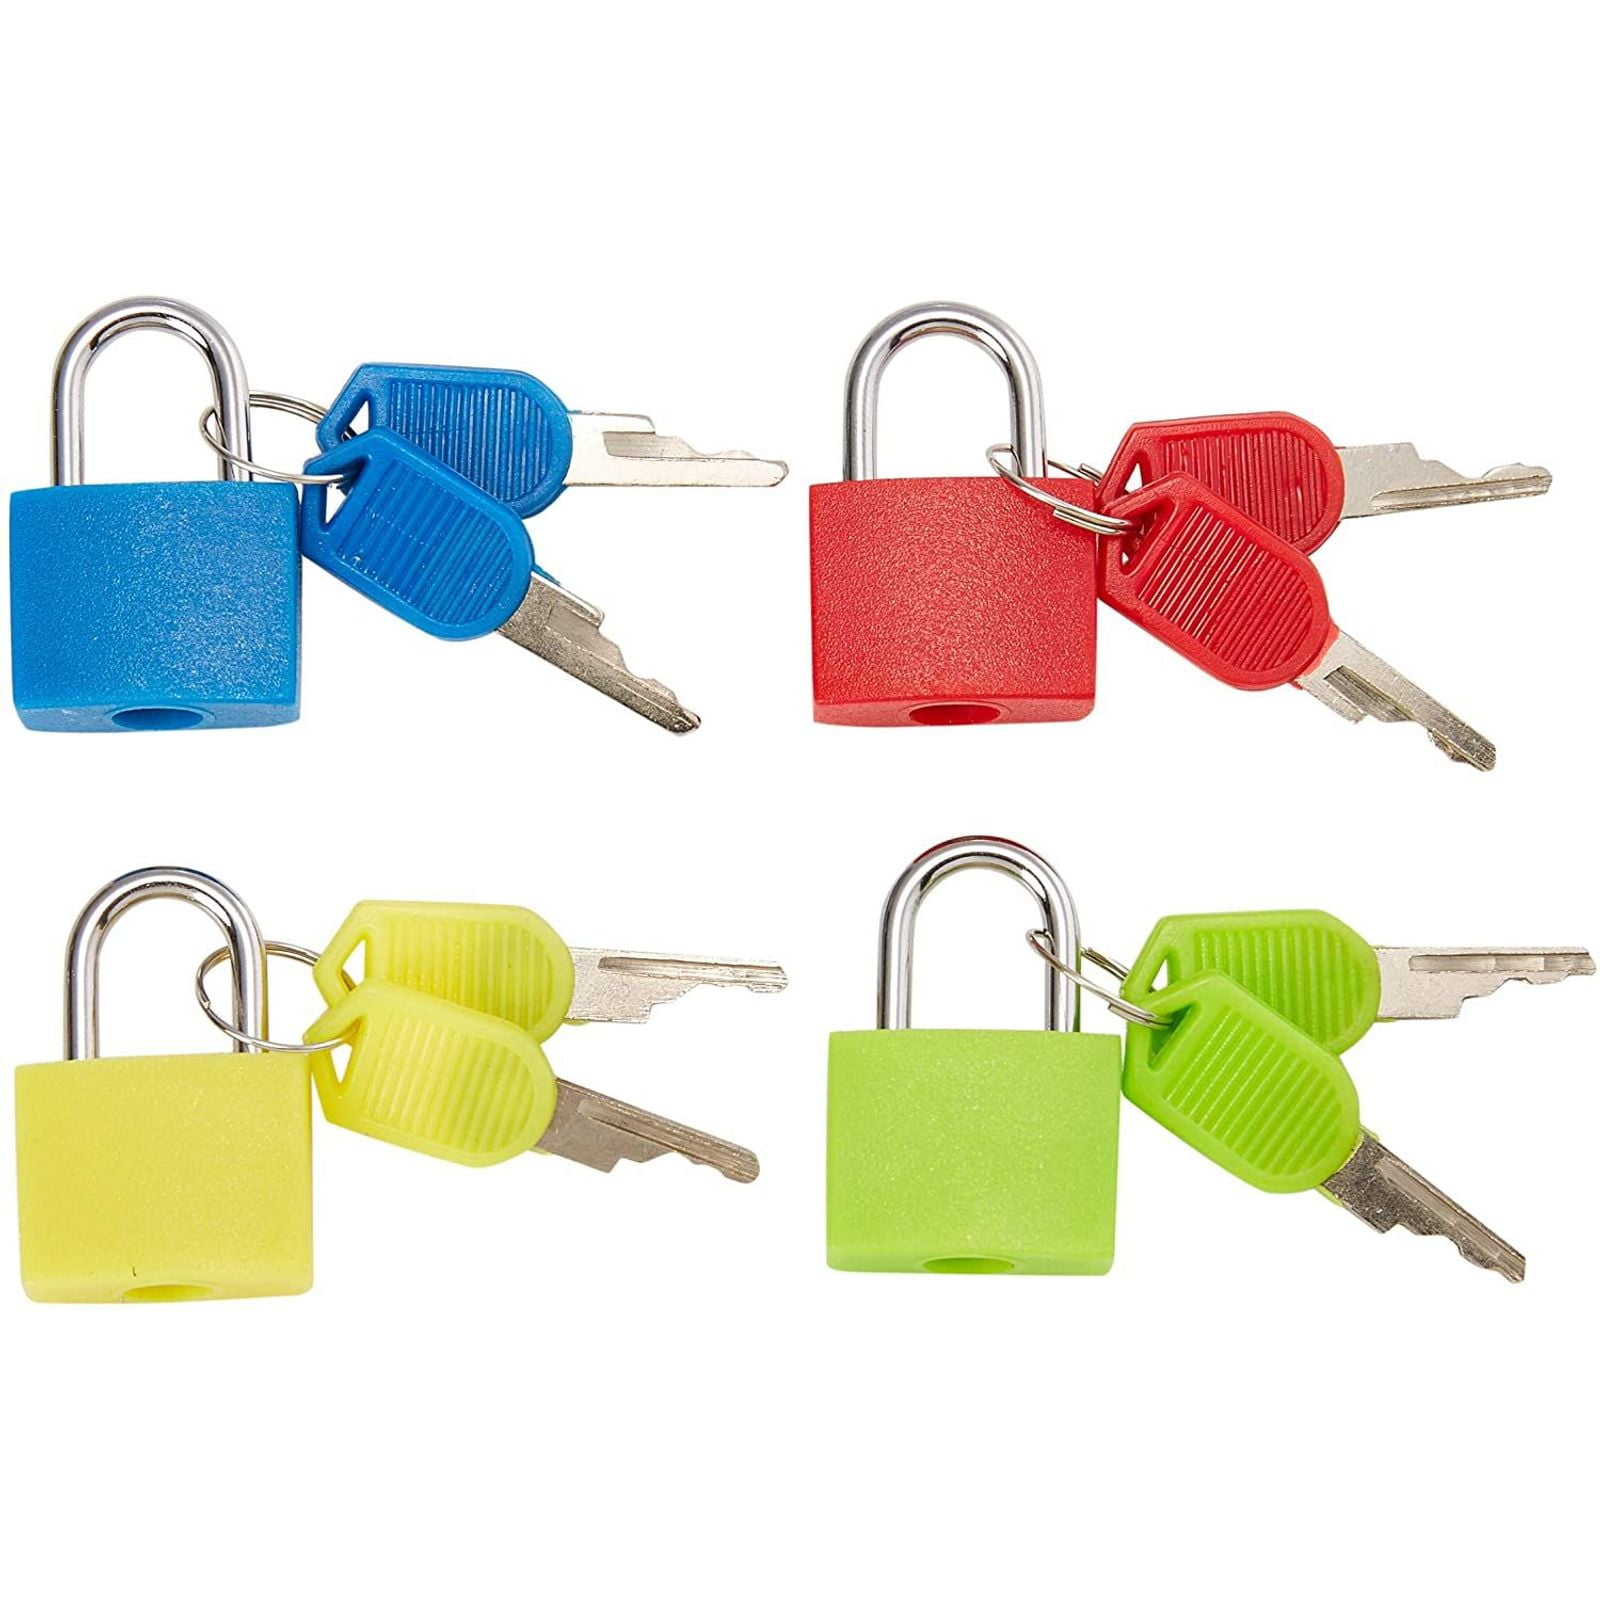 2 x Bright Color Luggage Locks With 2 Keys Suitcase Travel Security Padlock Lock 